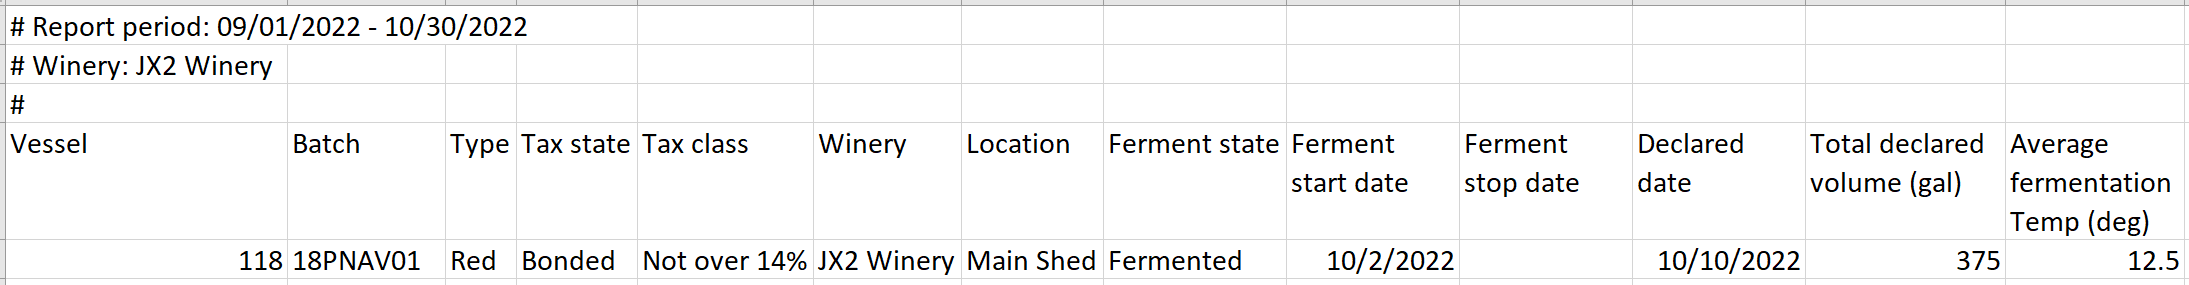 Ferment_Details_Report_-_Example_2.4.png